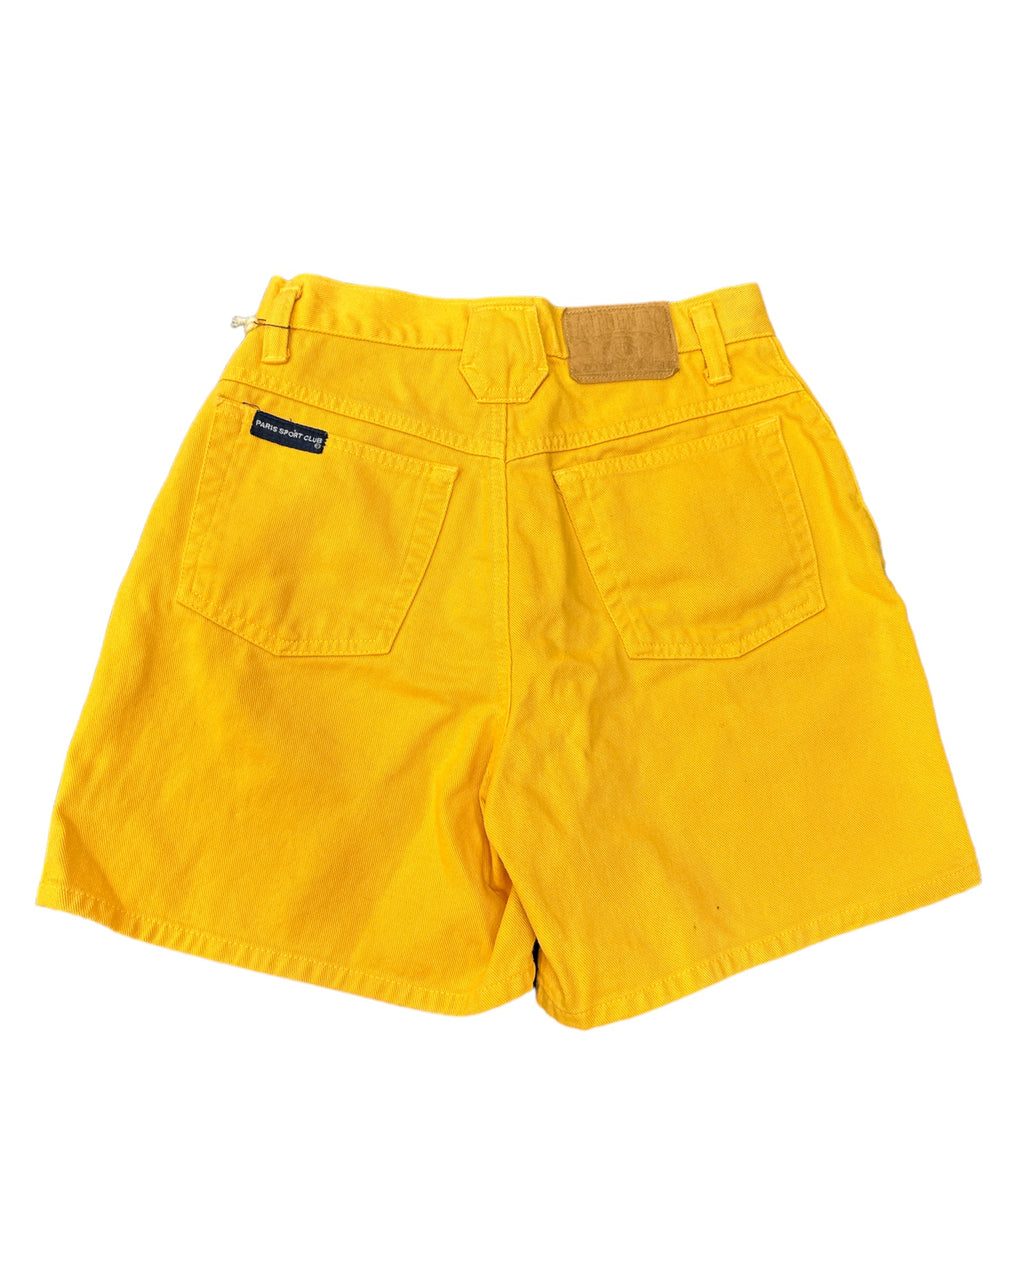 Yellow Paris Sport Club Denim Shorts, 4